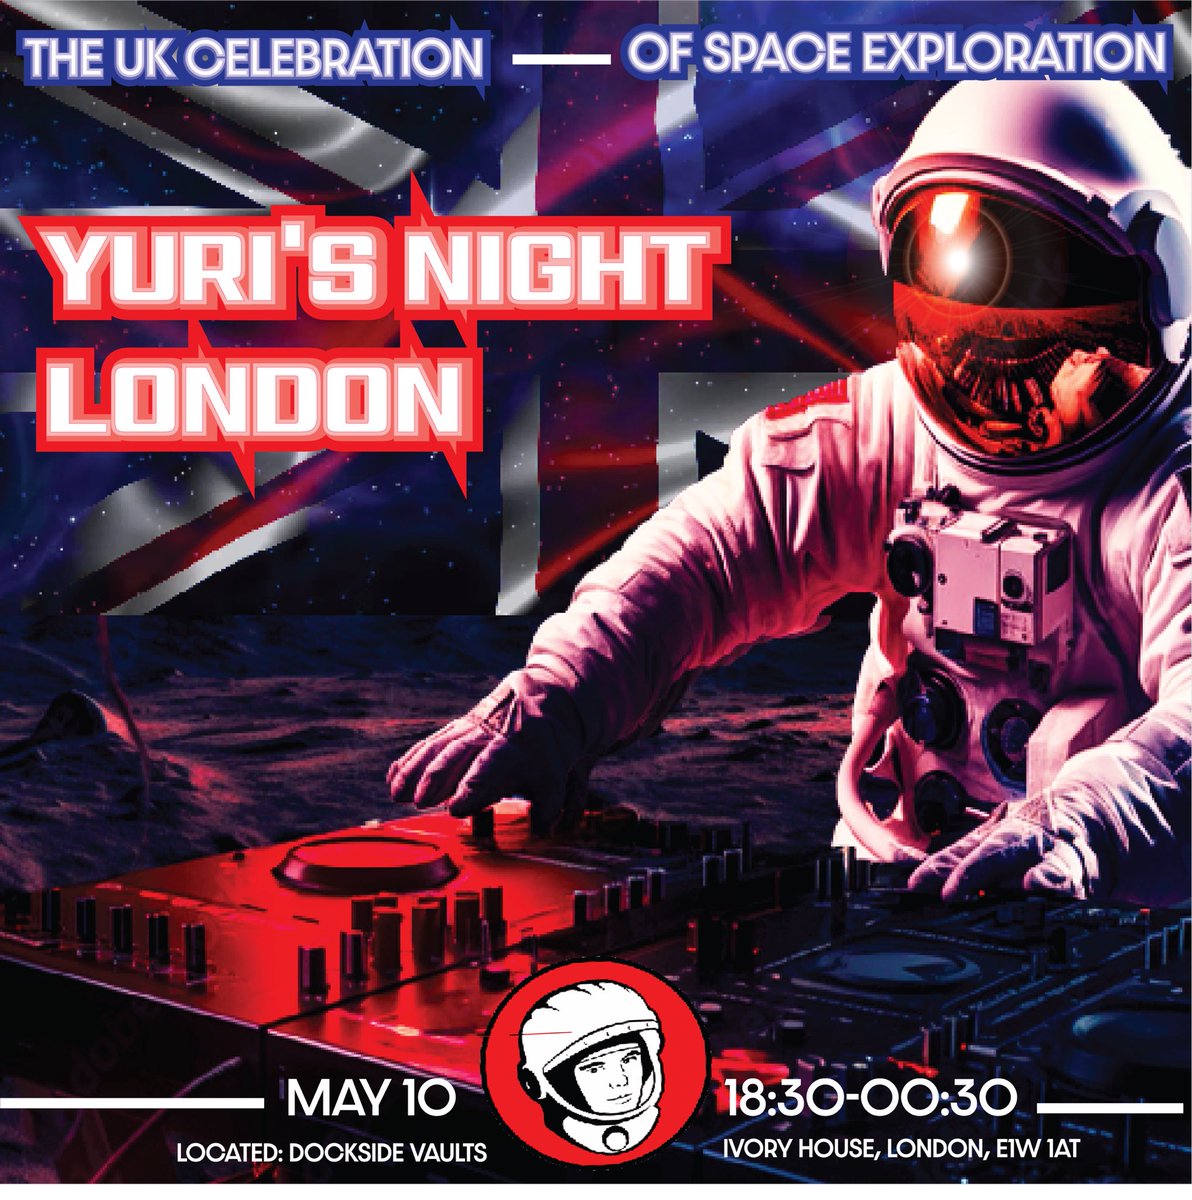 Yuri’s Night London is NEXT WEEK! Fri May 10, 6:30pm til late Dockside Vaults, E1W 1AT Details and tickets: yurisnight.net/london/tickets